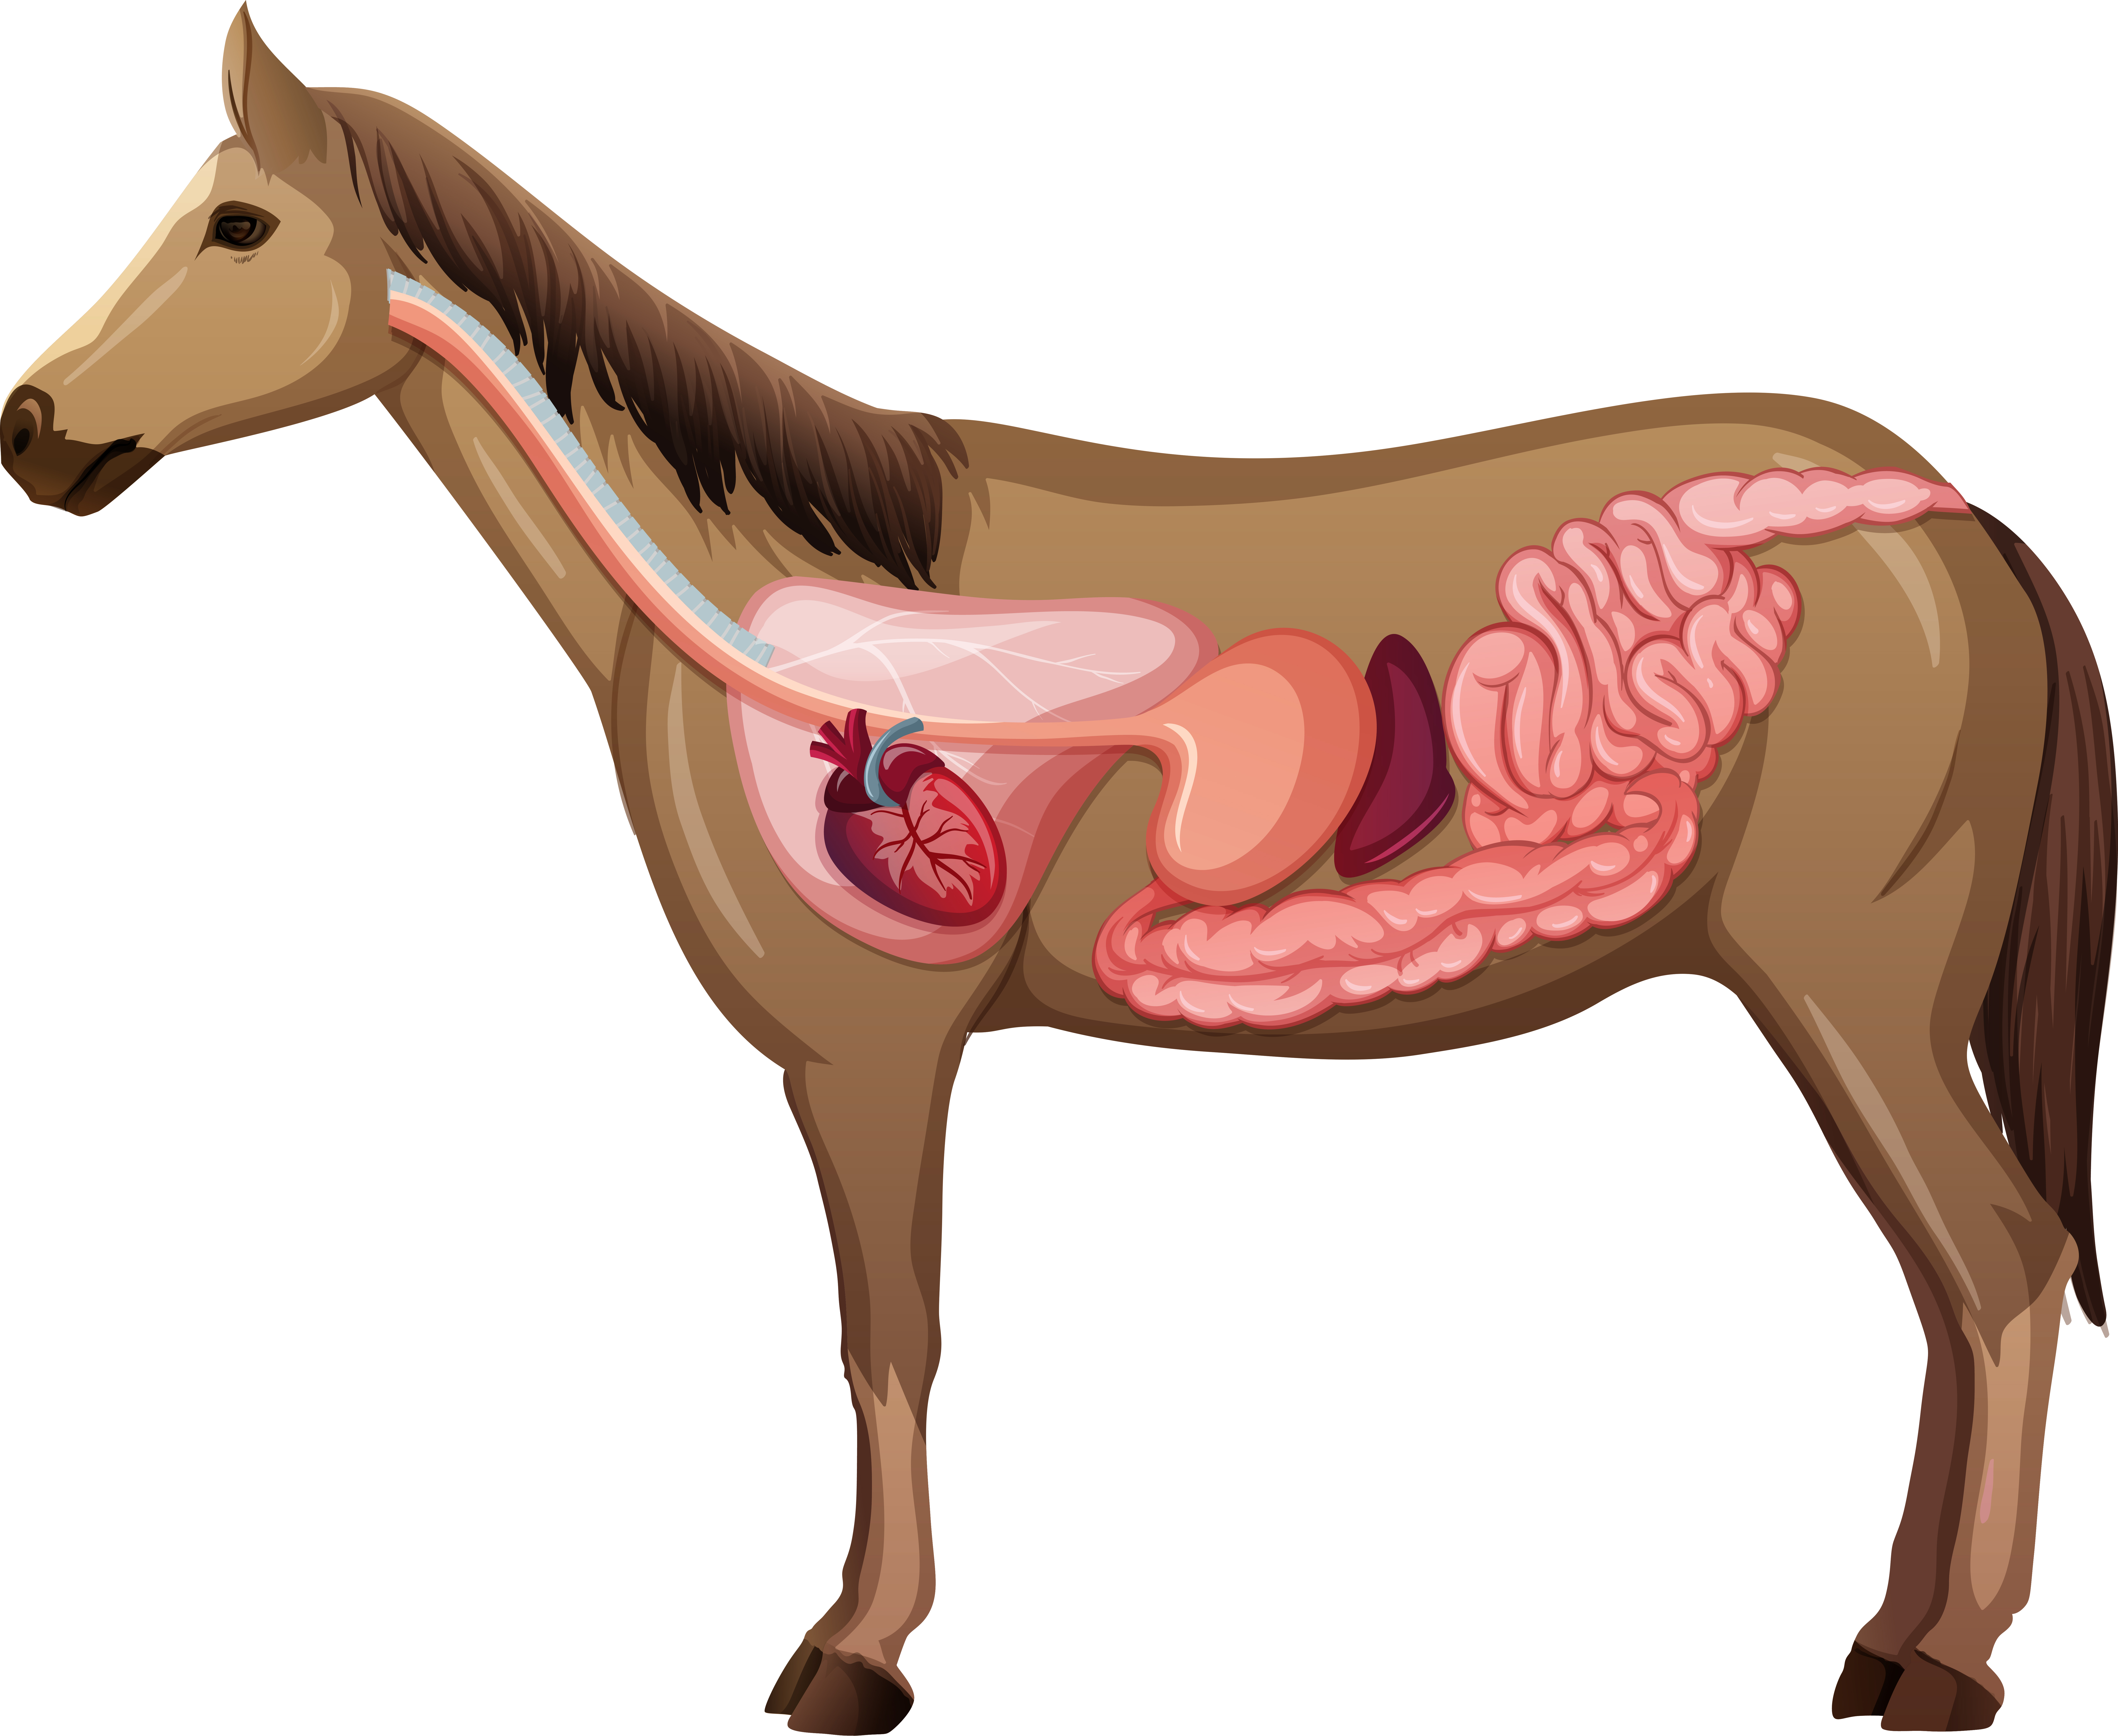 Laboklin: Equine gastrointestinal tract